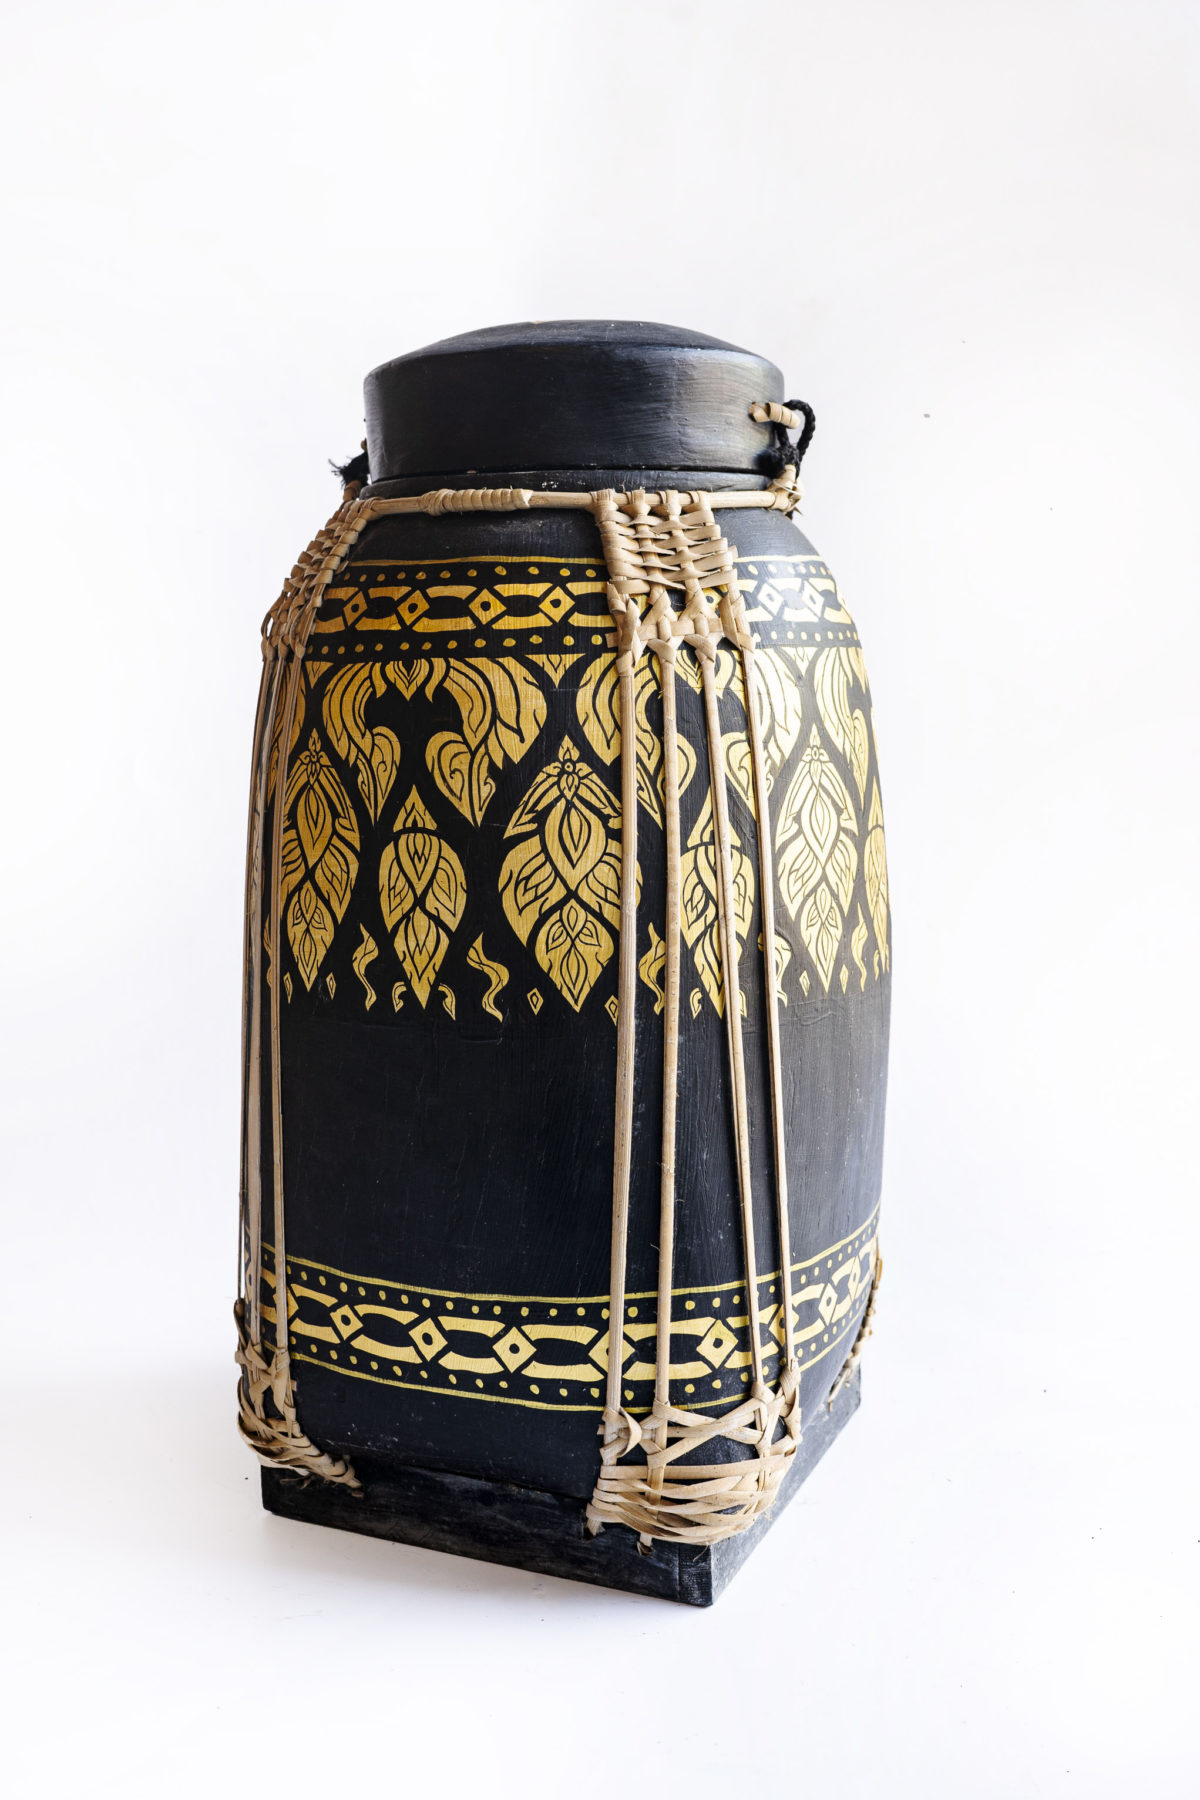 Dark painted bamboo basket